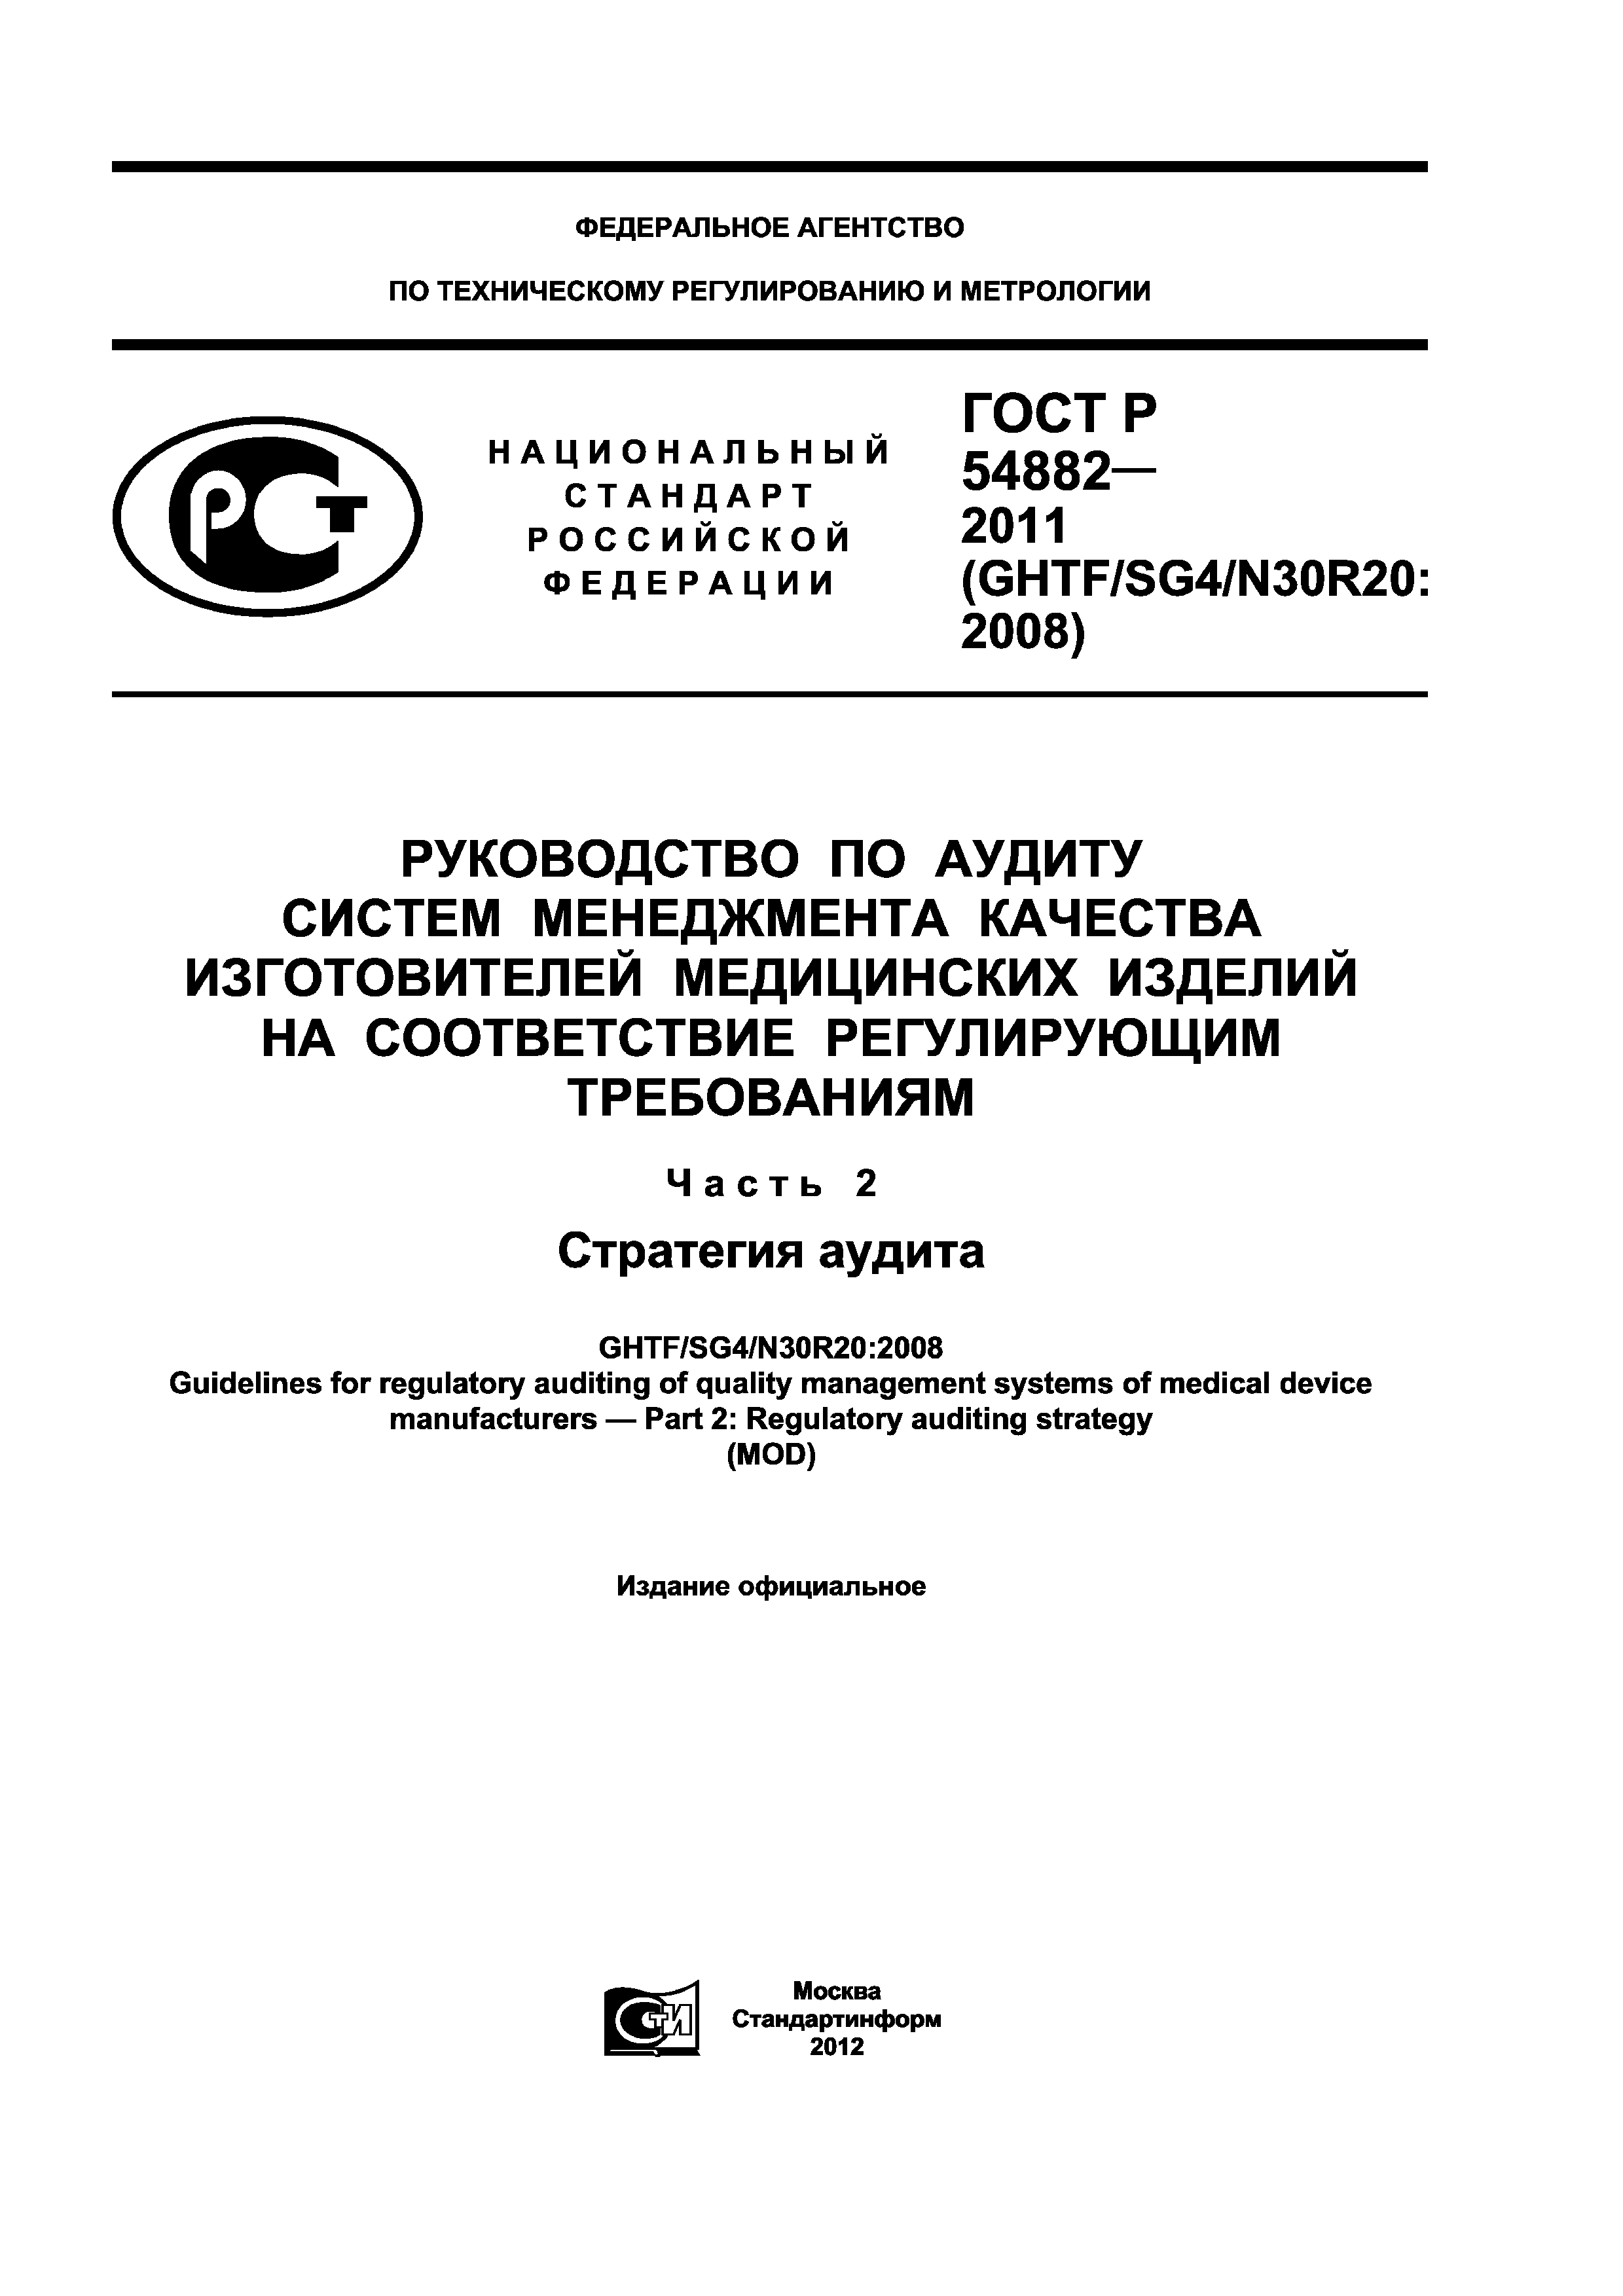 ГОСТ Р 54882-2011